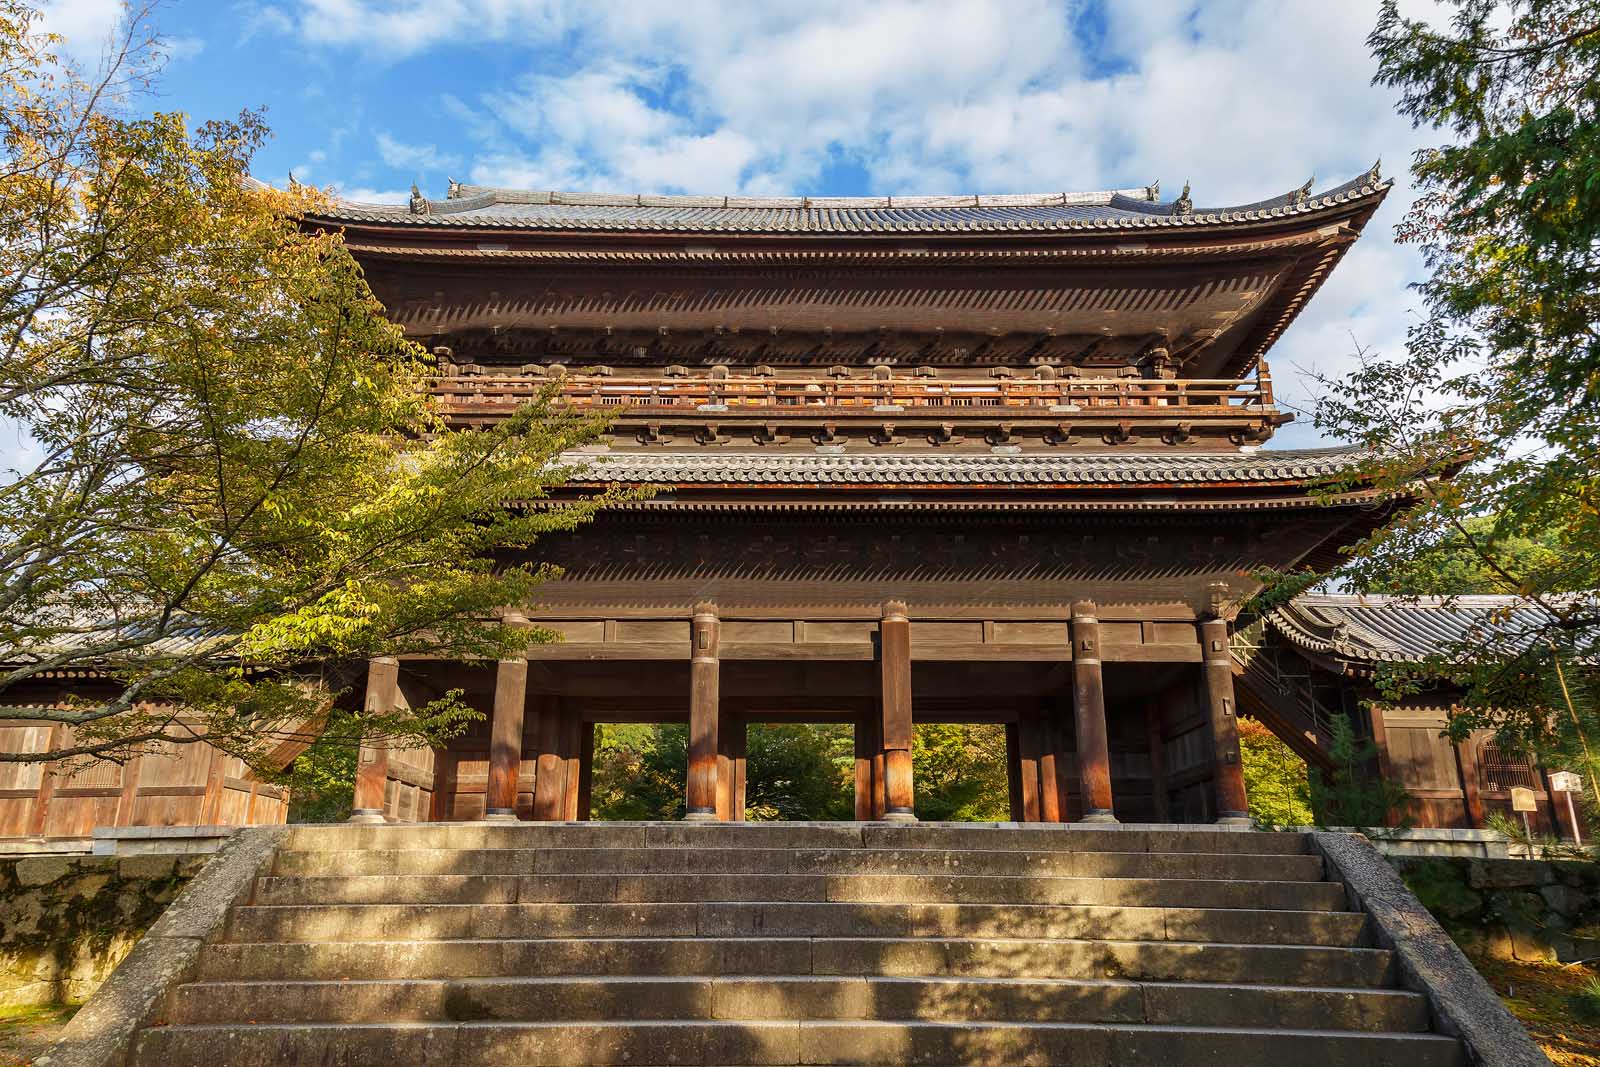 Nazen-ji Temple complex in Kyoto, Japan